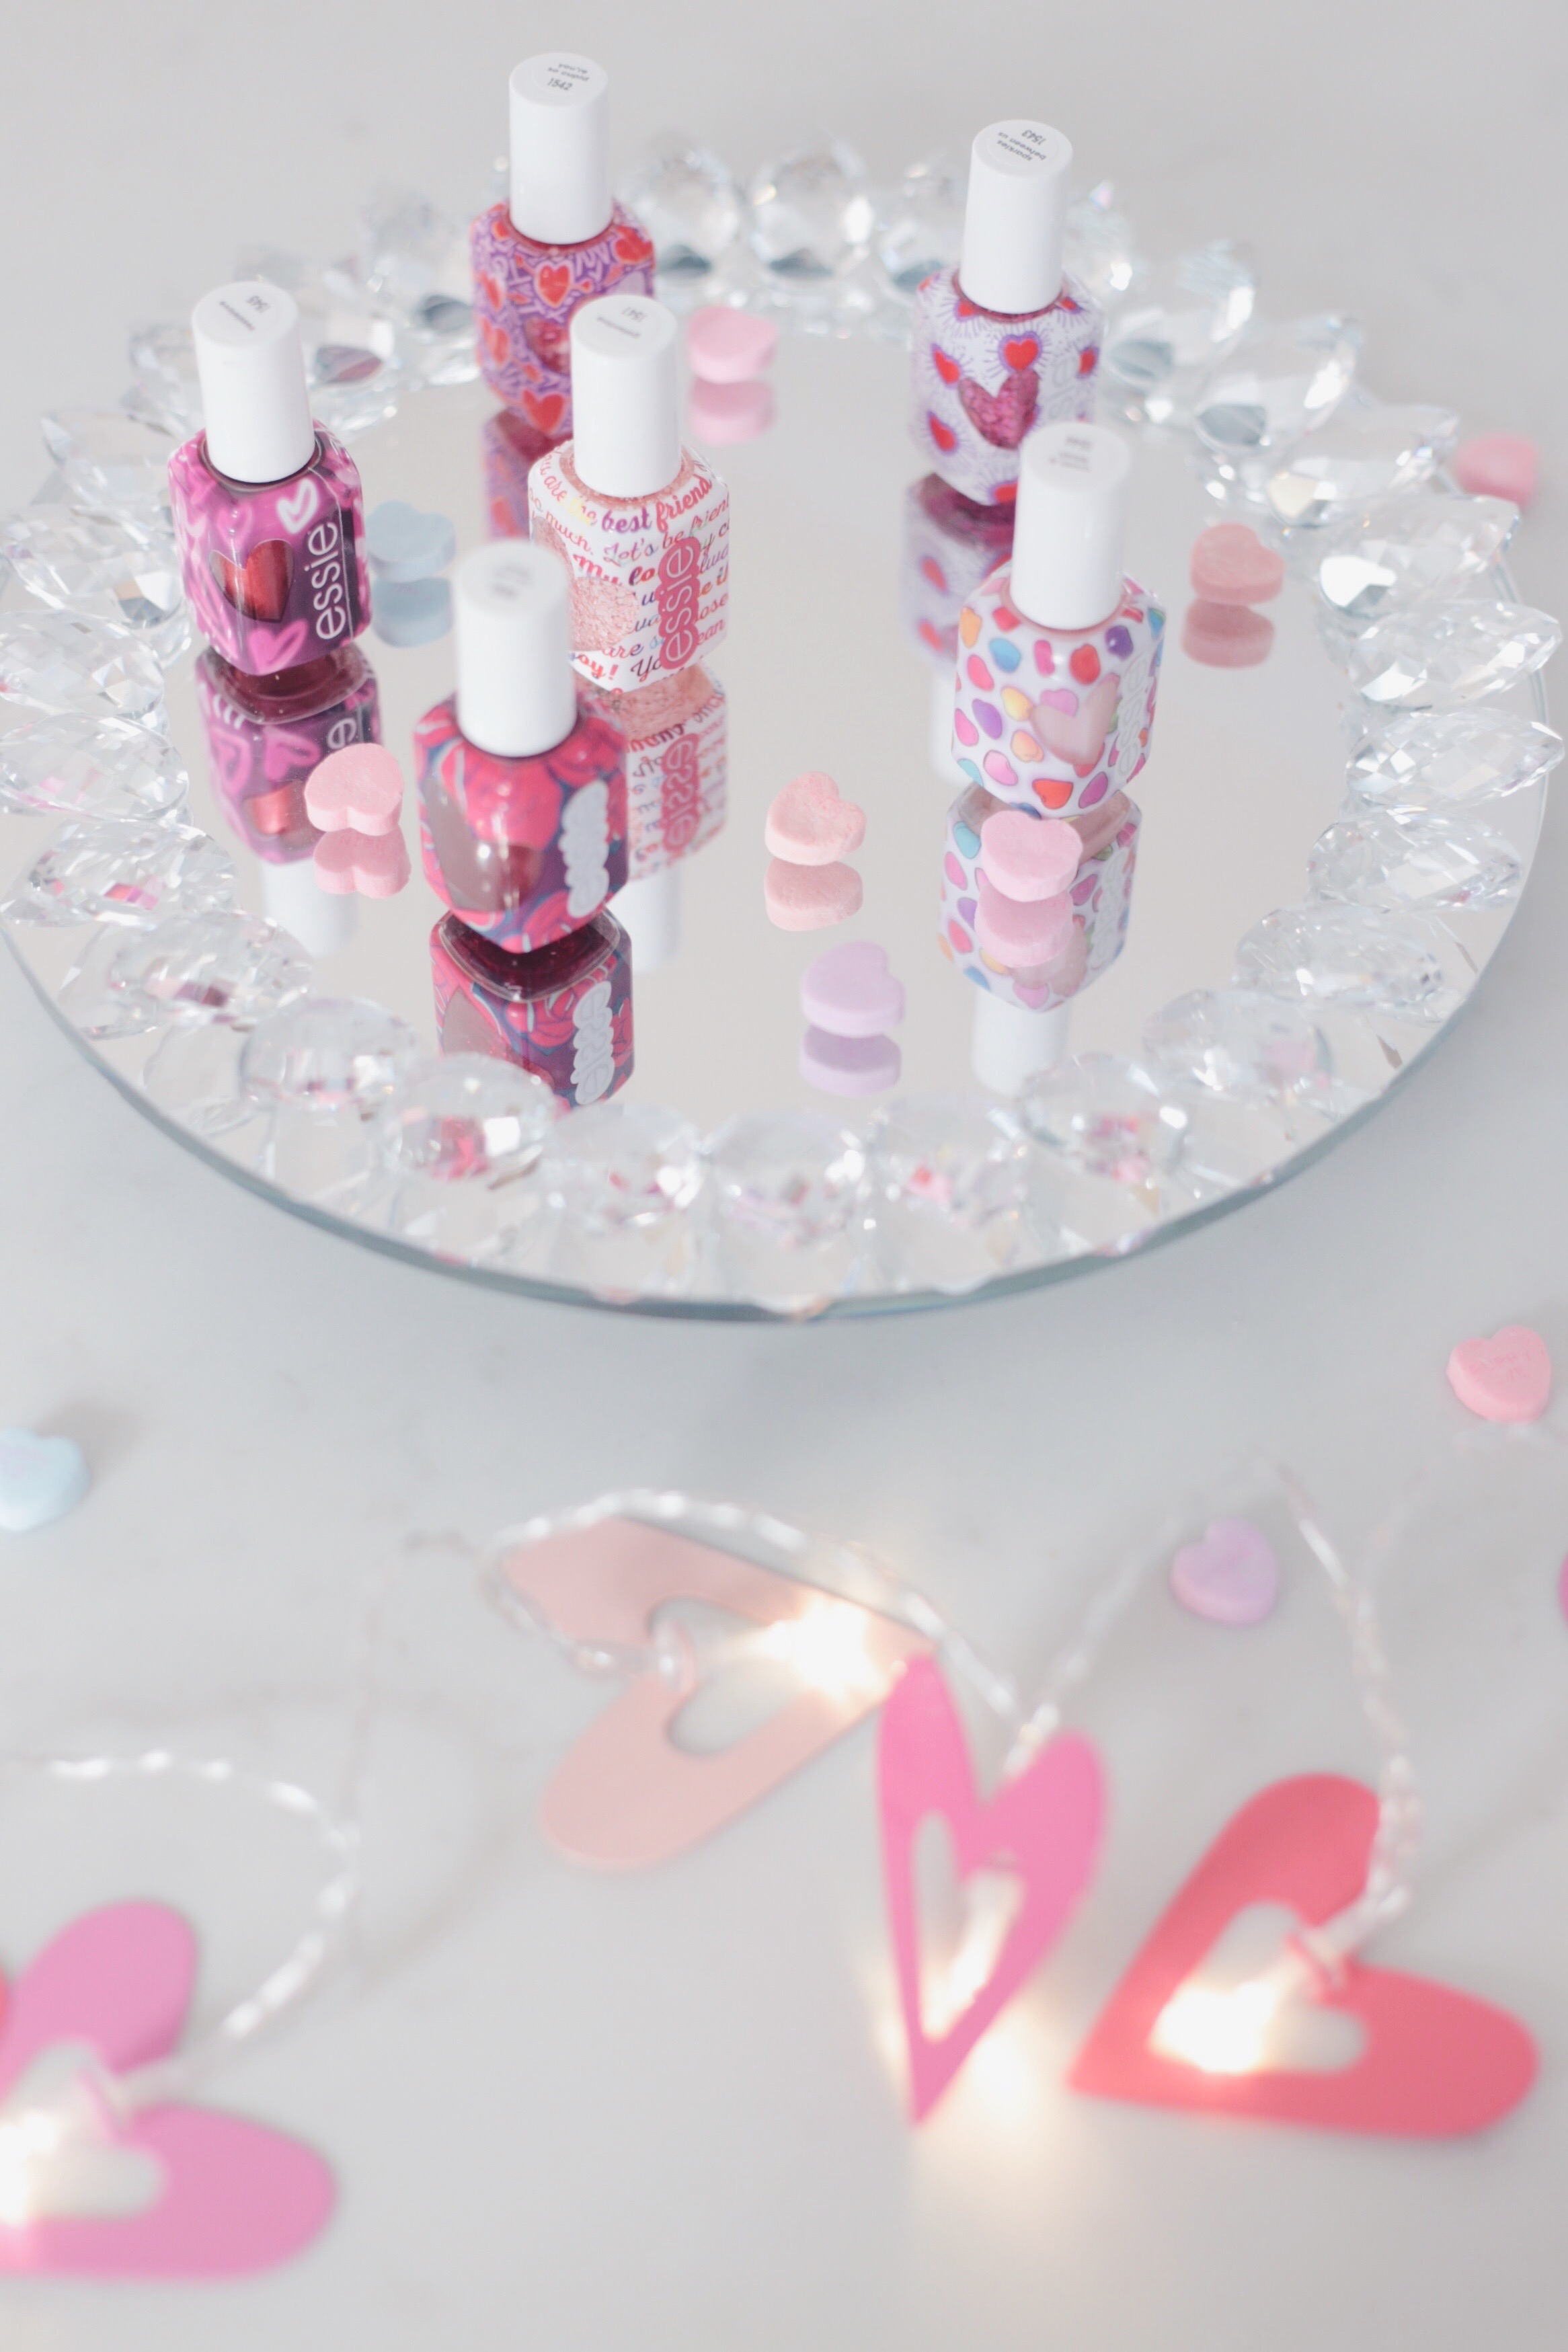 valentine's day manicure with essie - nail polish 2019 pinteresting plans blog